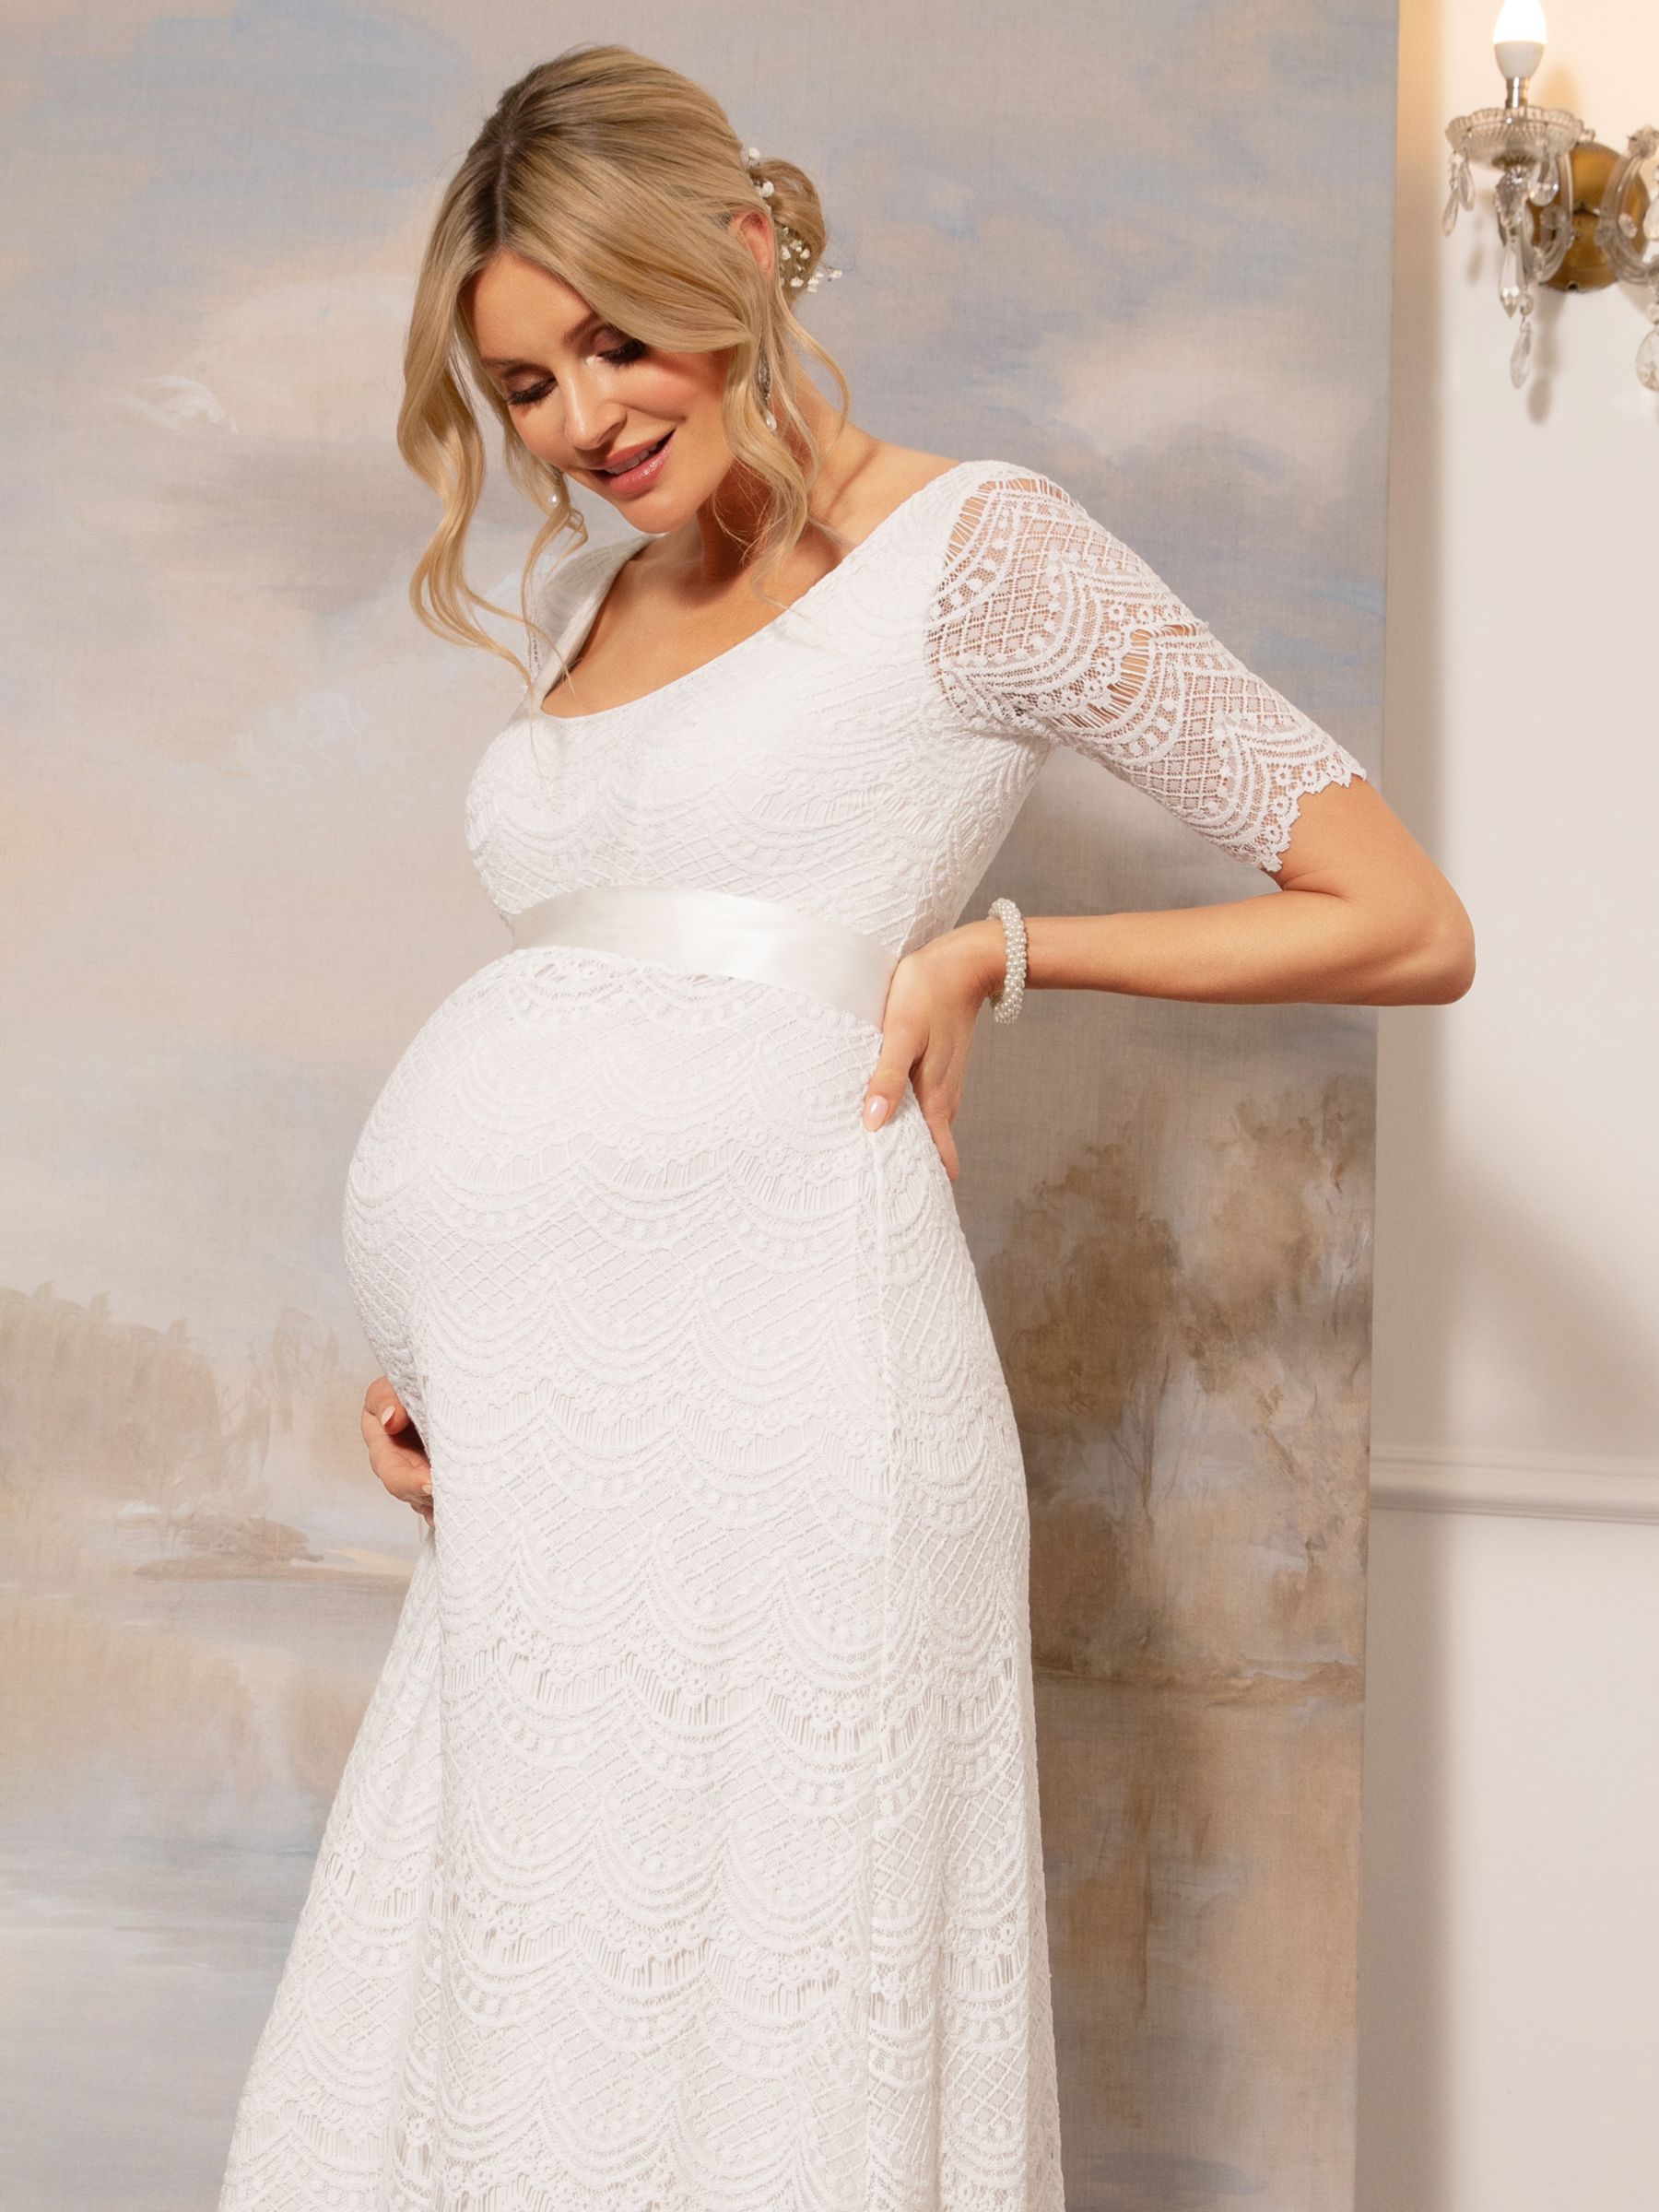 Tiffany Rose Verona Maternity Floral Lace Wedding Dress, Ivory, 6-8